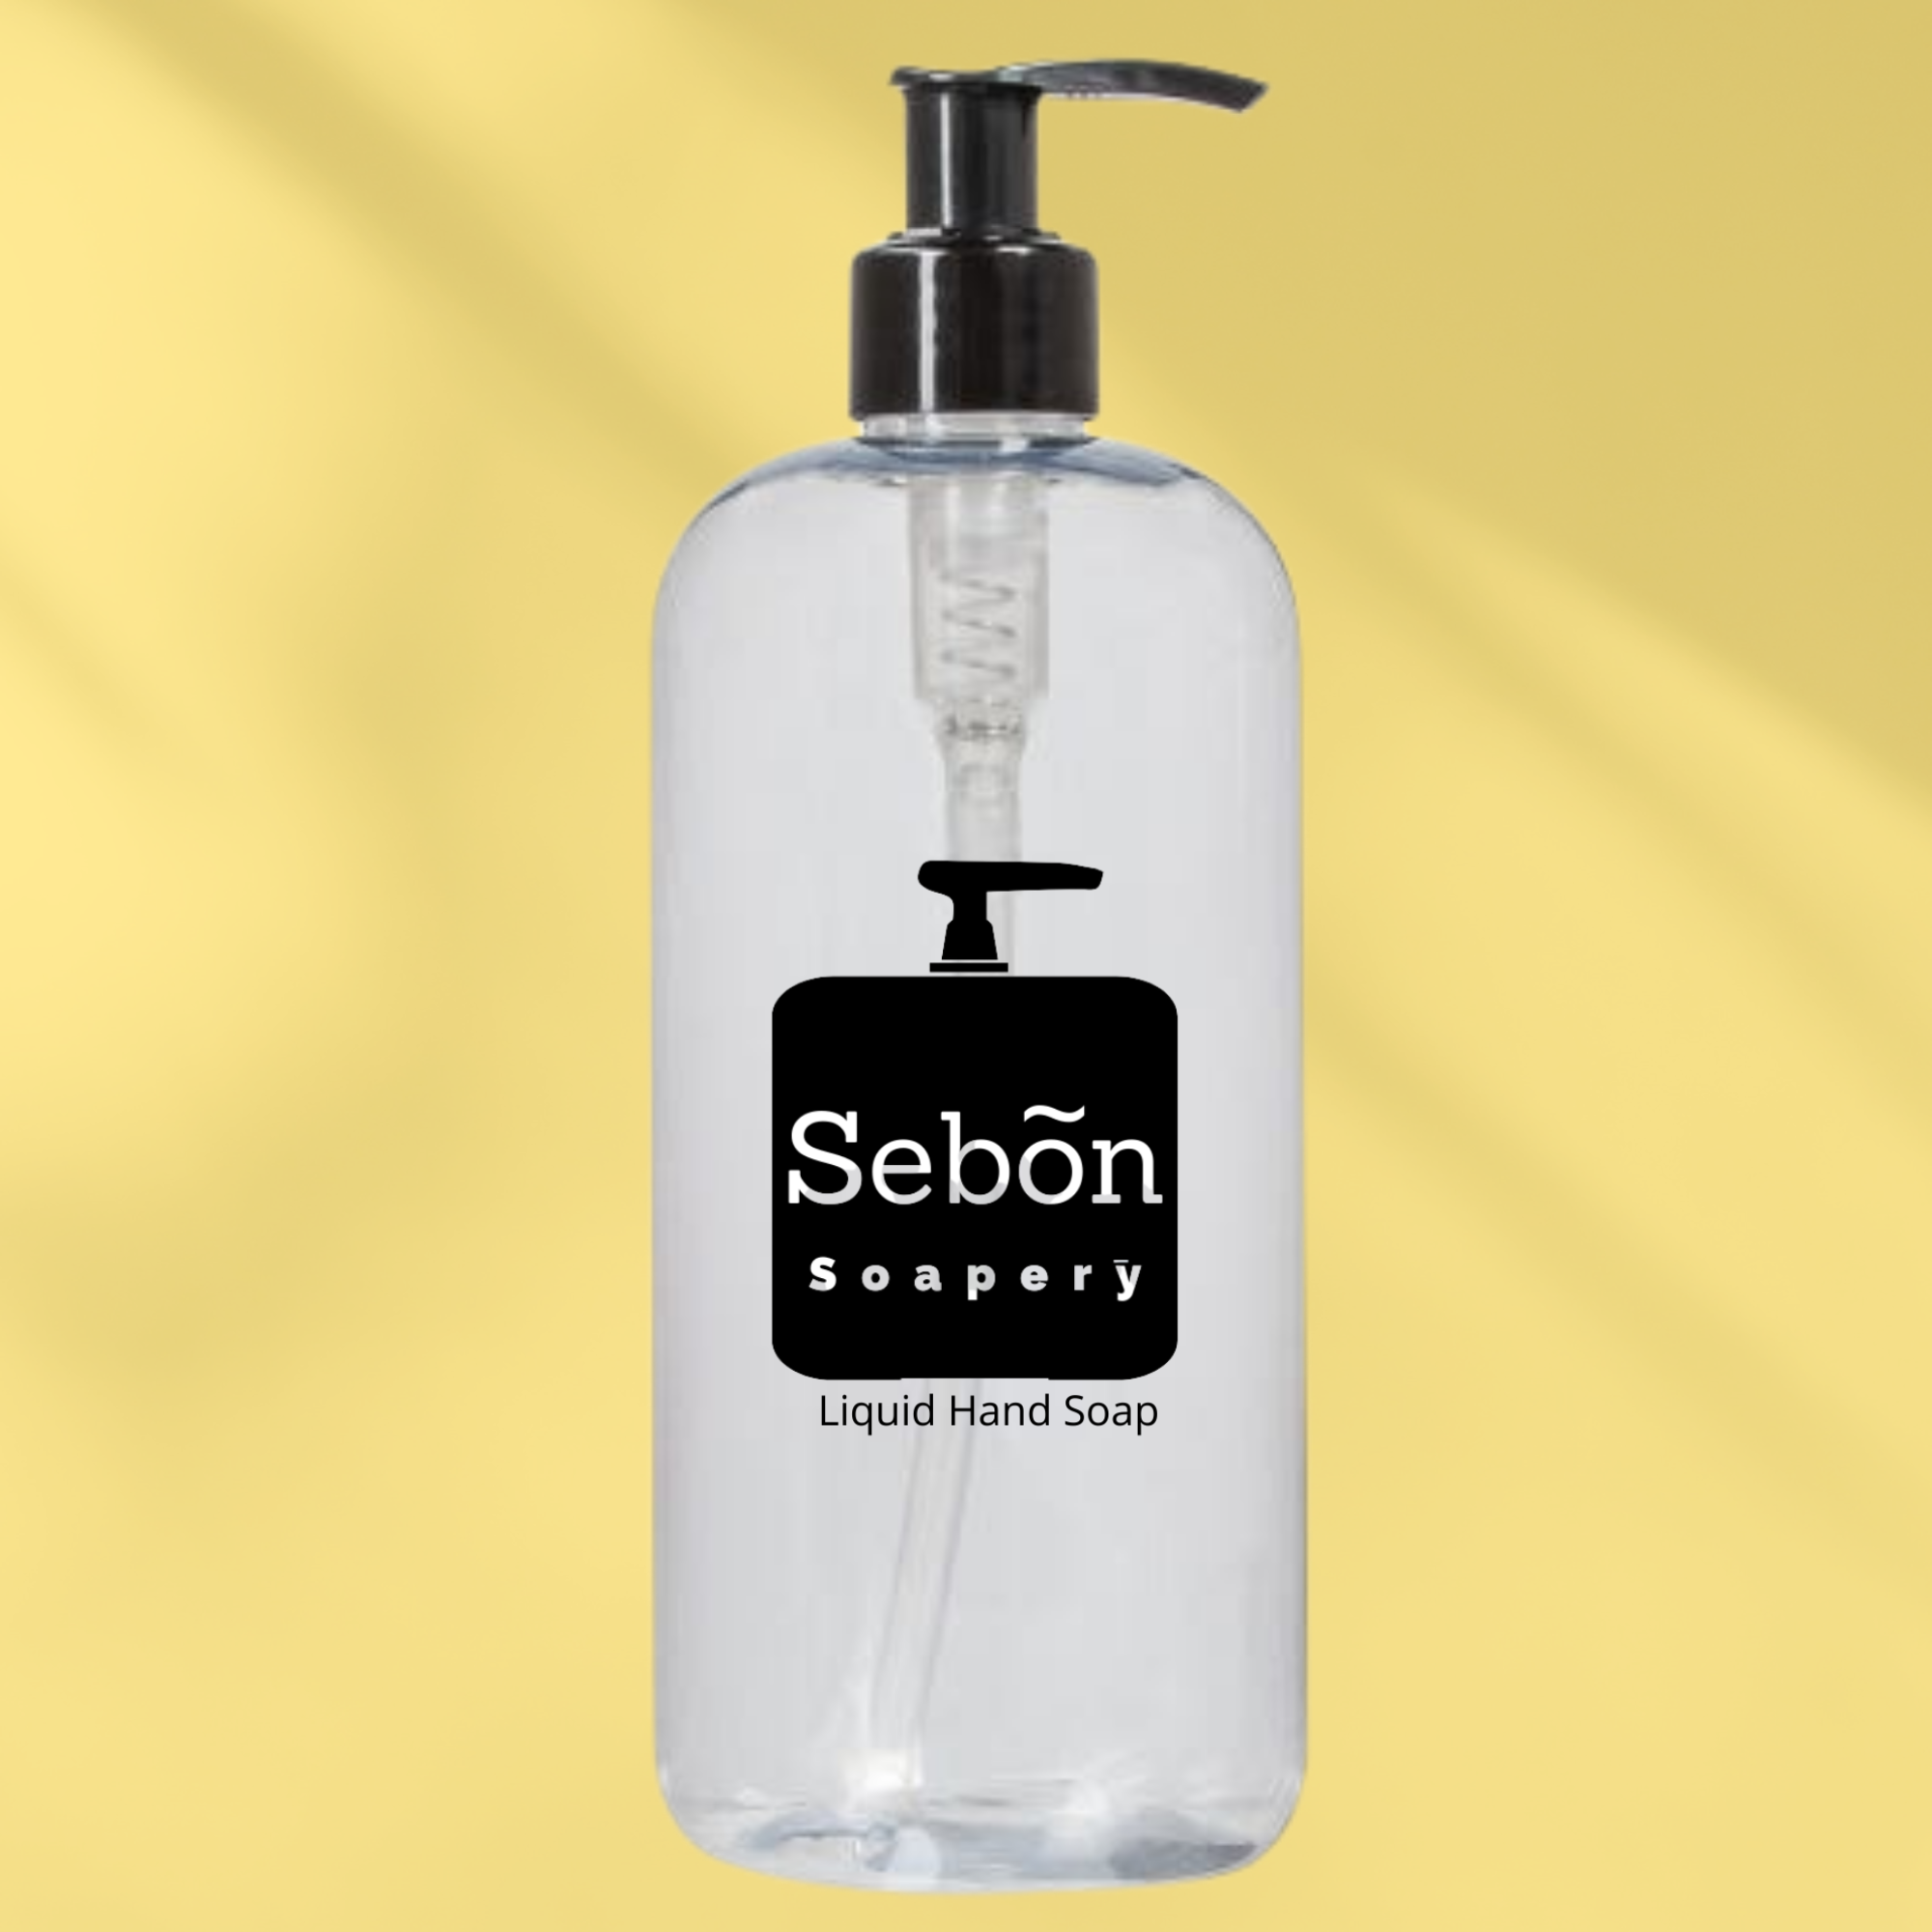 Sebon Poinsettia Scented Liquid Hand Soap with Olive Oil